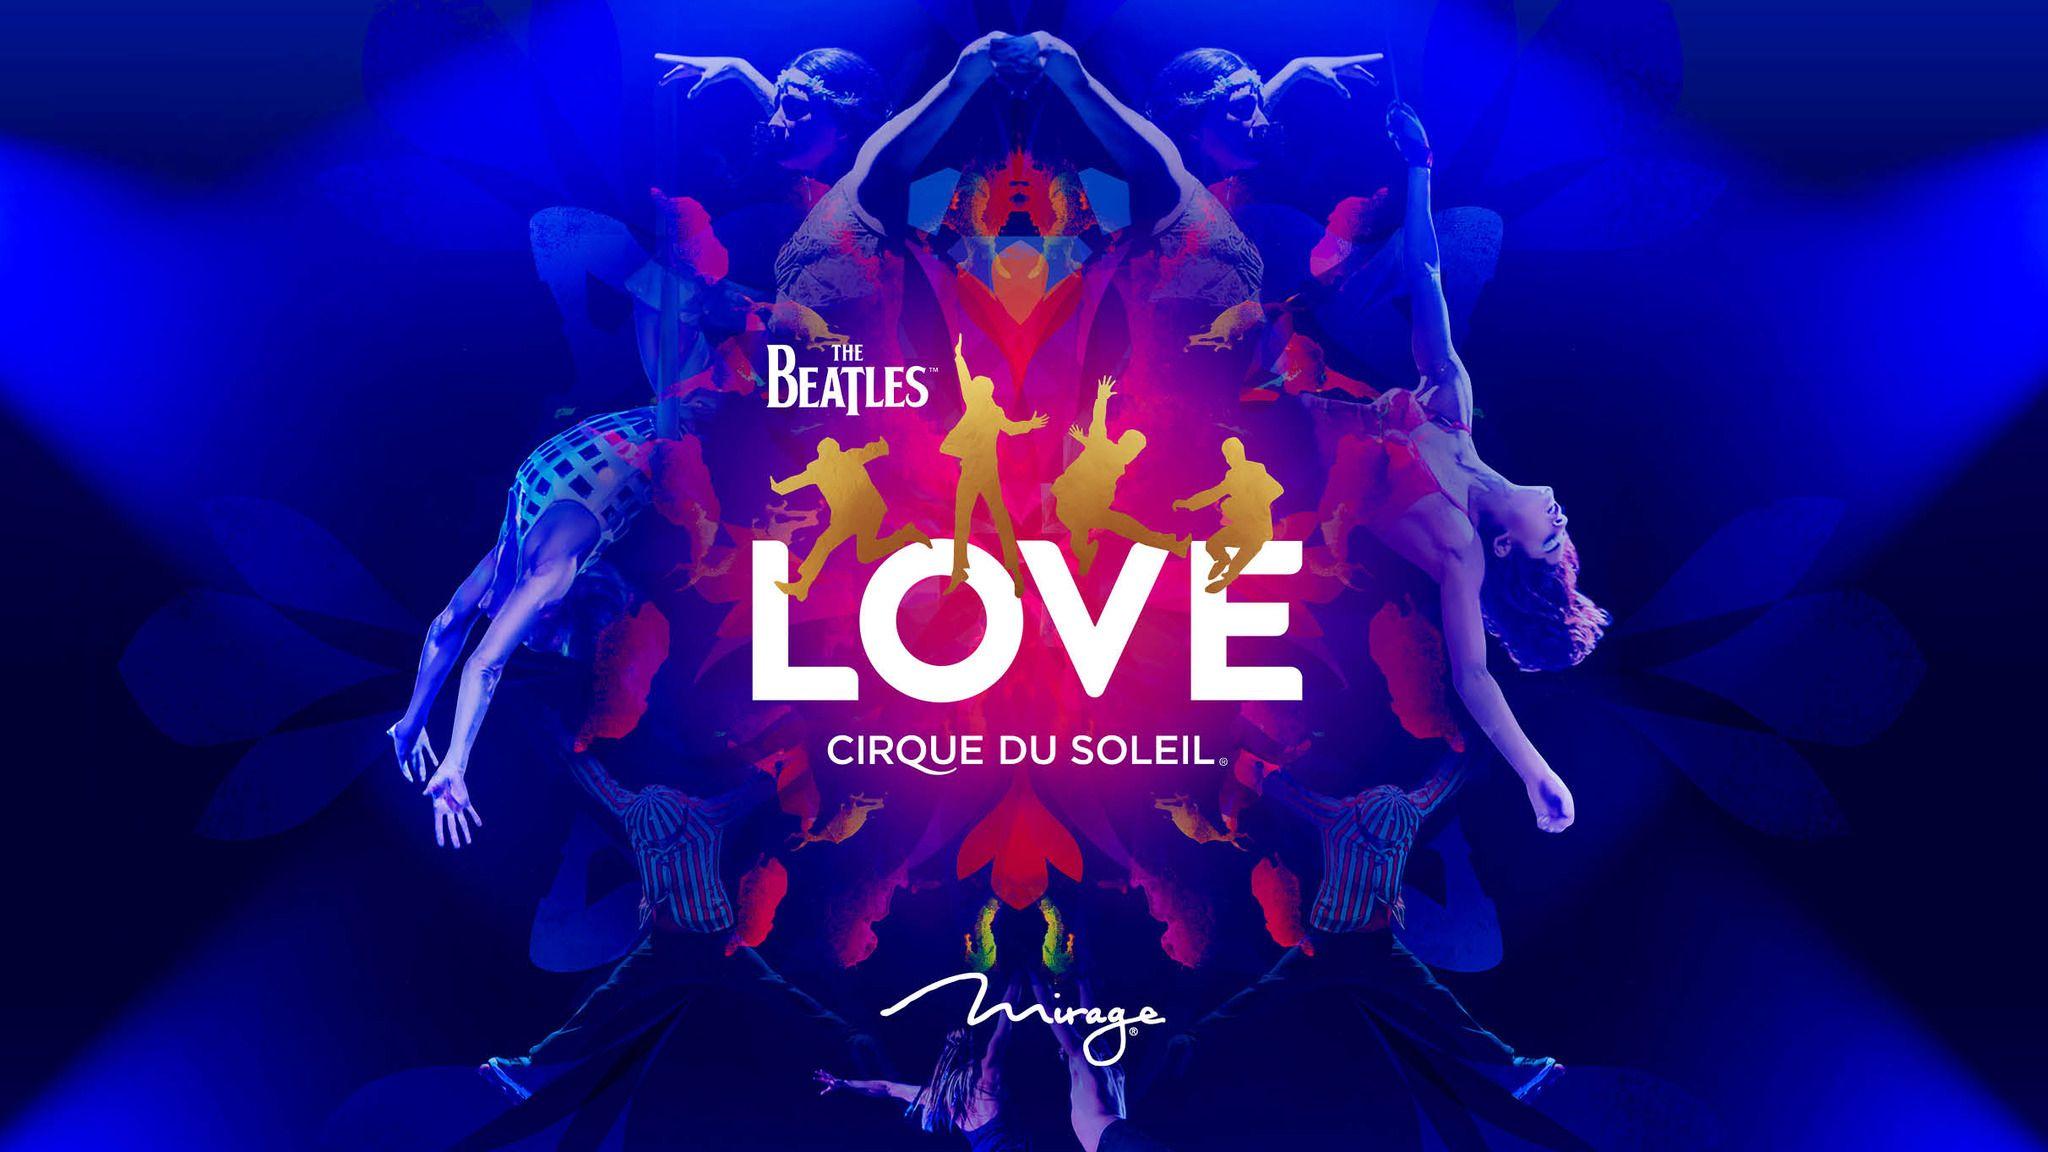 Cirque du Soleil: The Beatles LOVE Tickets. Cirque du Soleil